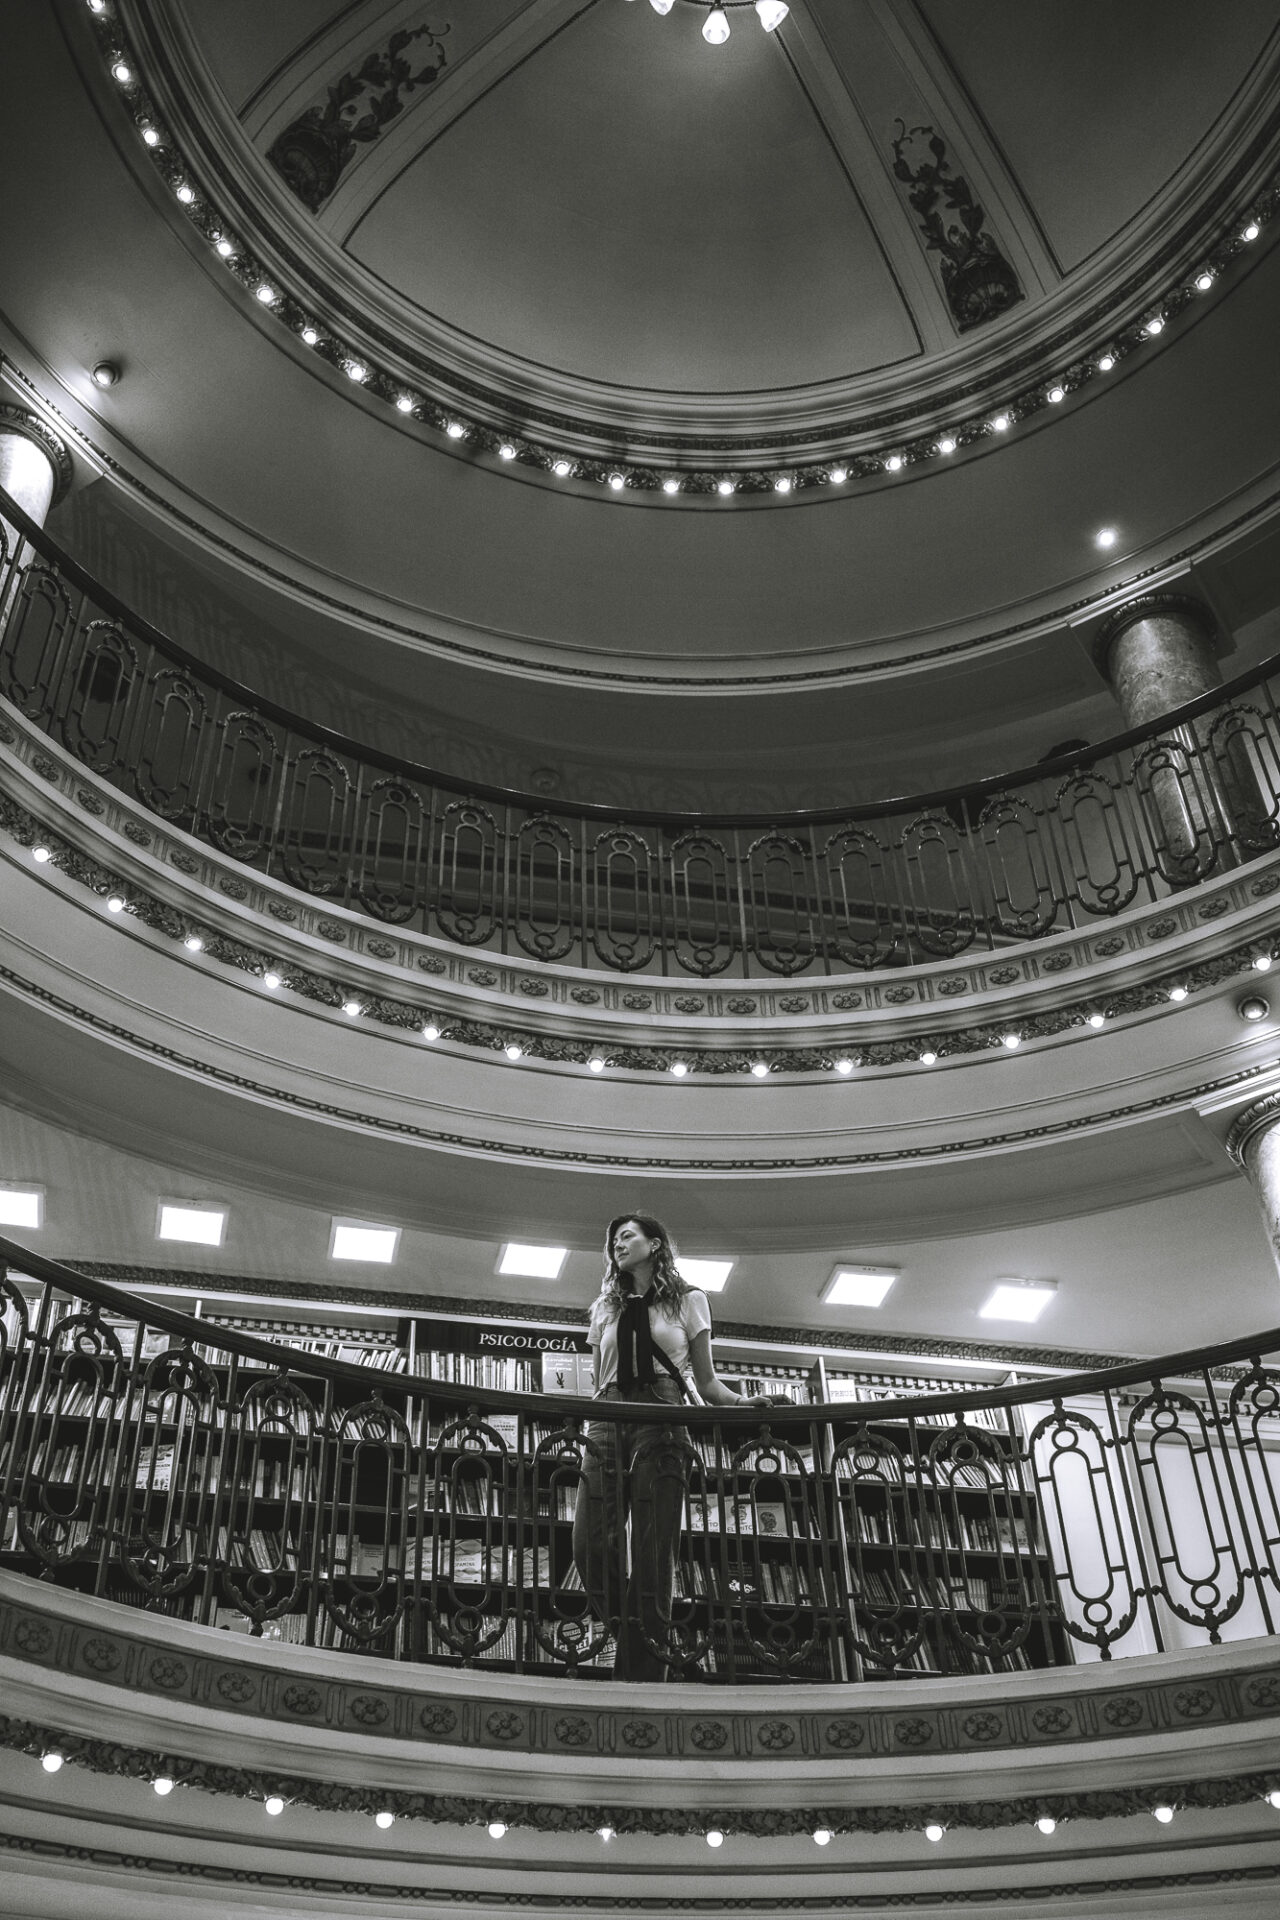 El Ateneo Grand Splendid book store